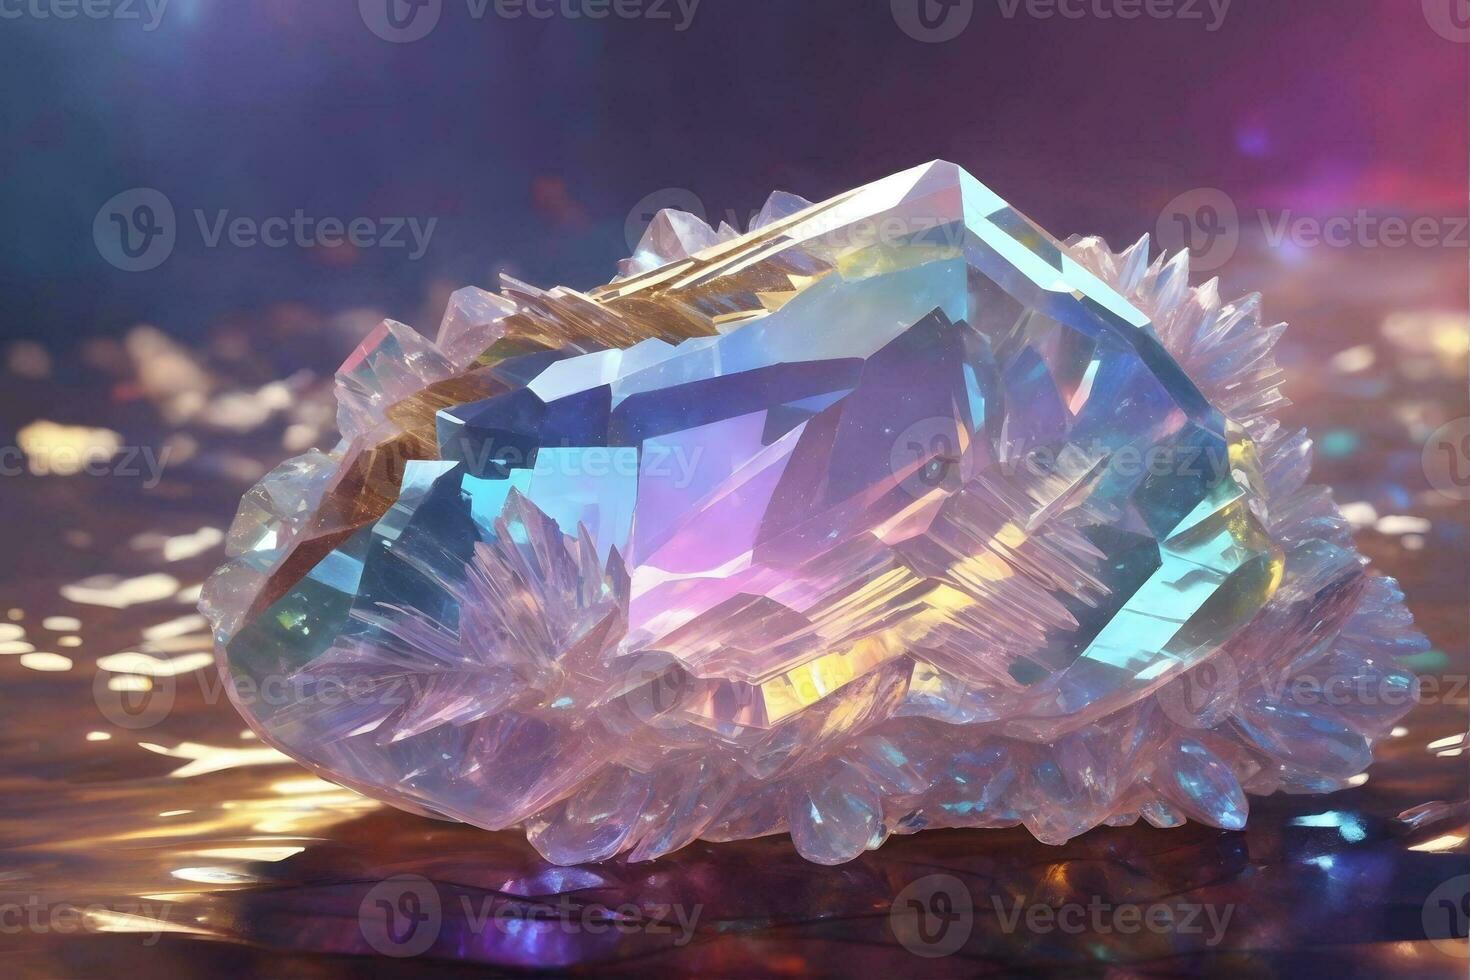 engel aura kwarts, kristal edelsteen, kristal diamant, kwarts diamant, engel aura kwarts steen, ai generatief foto